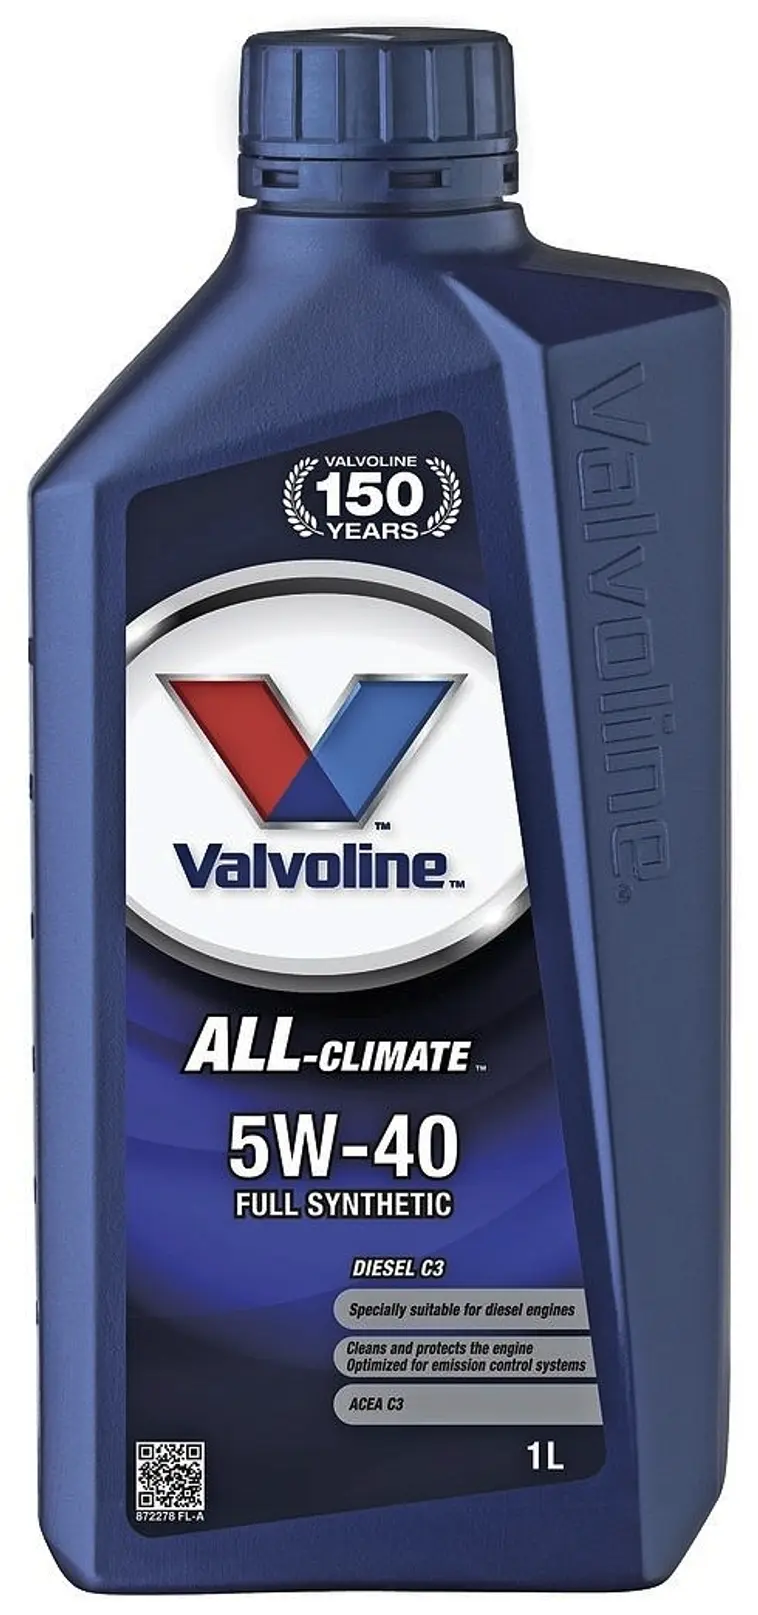 Valvoline All Climate Diesel C3 5W-40 moottoriöljy 1l